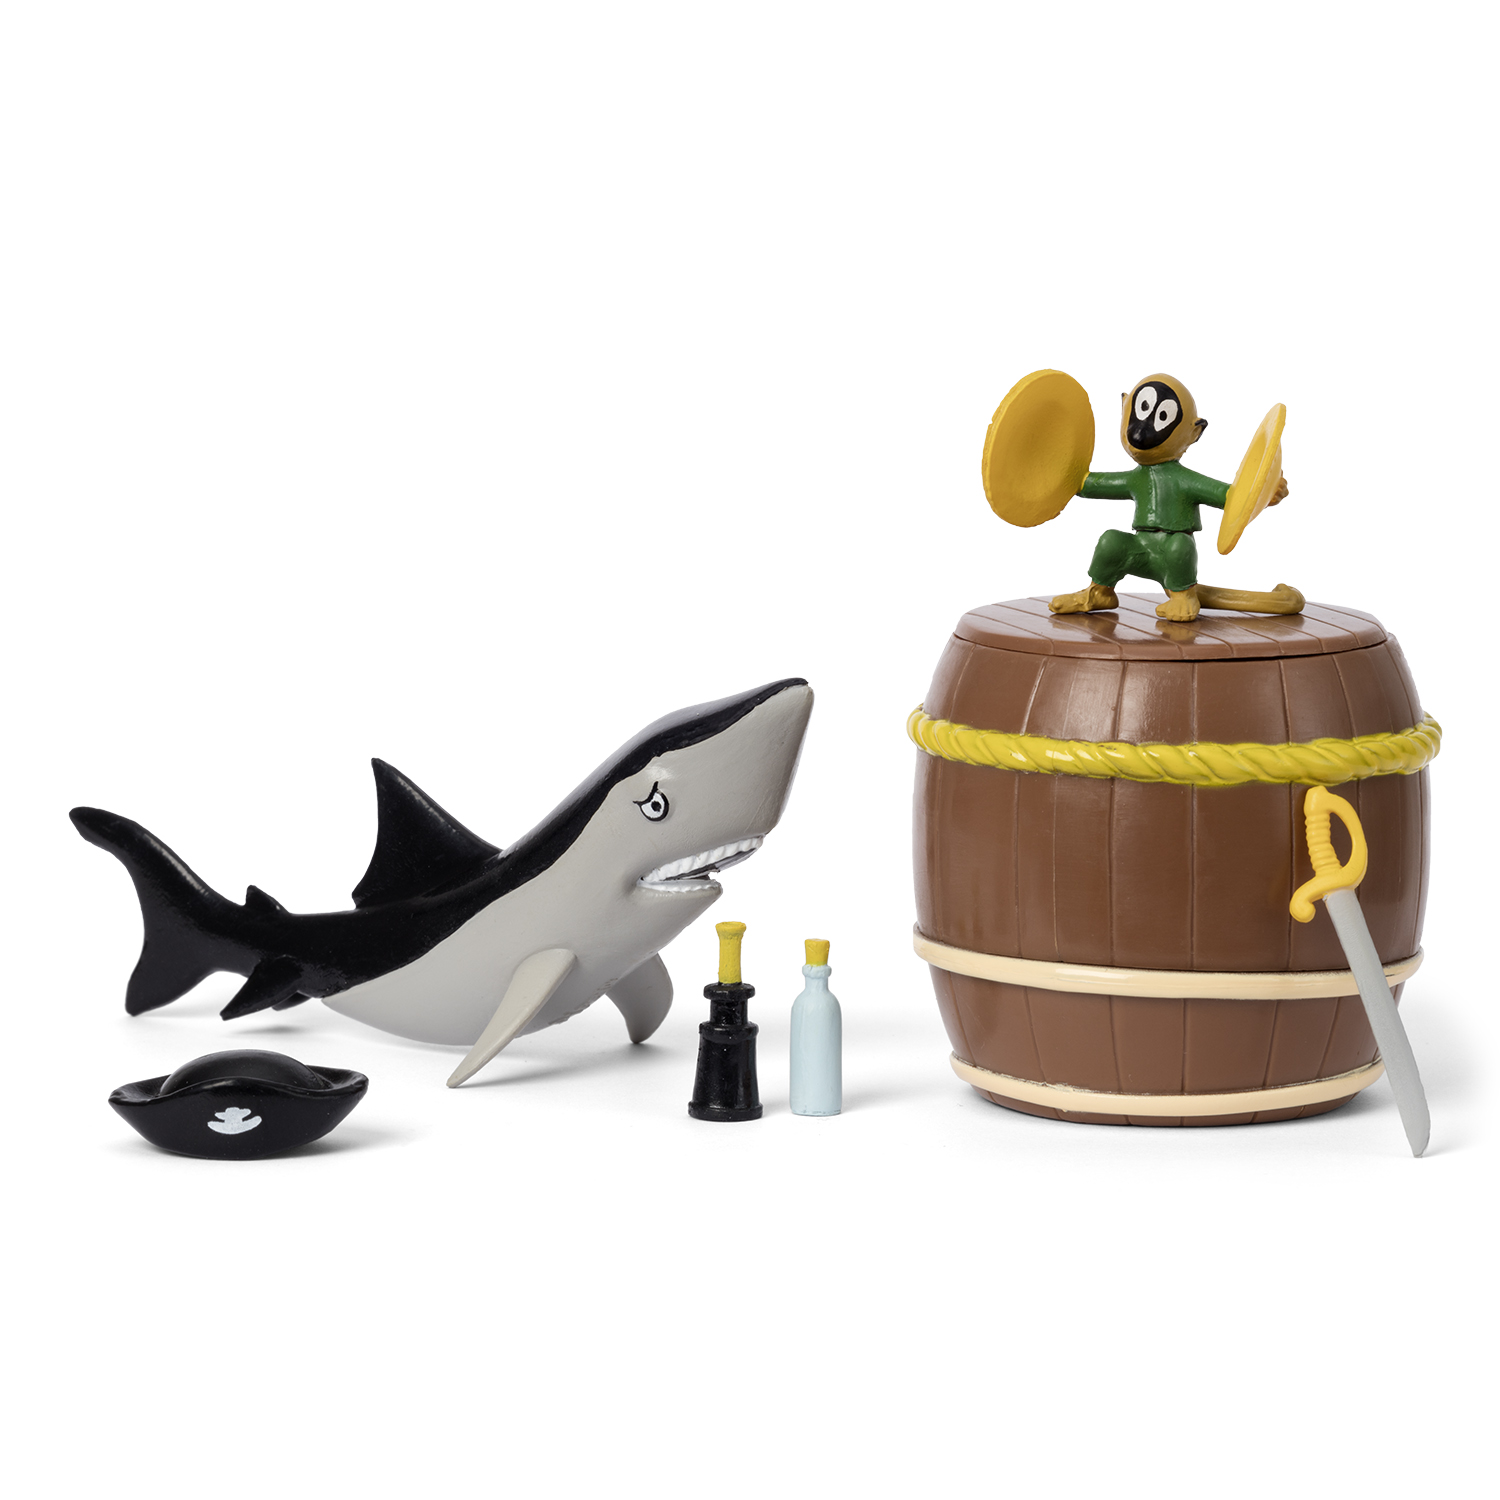 Pippi pippi figurine set pirate accessories